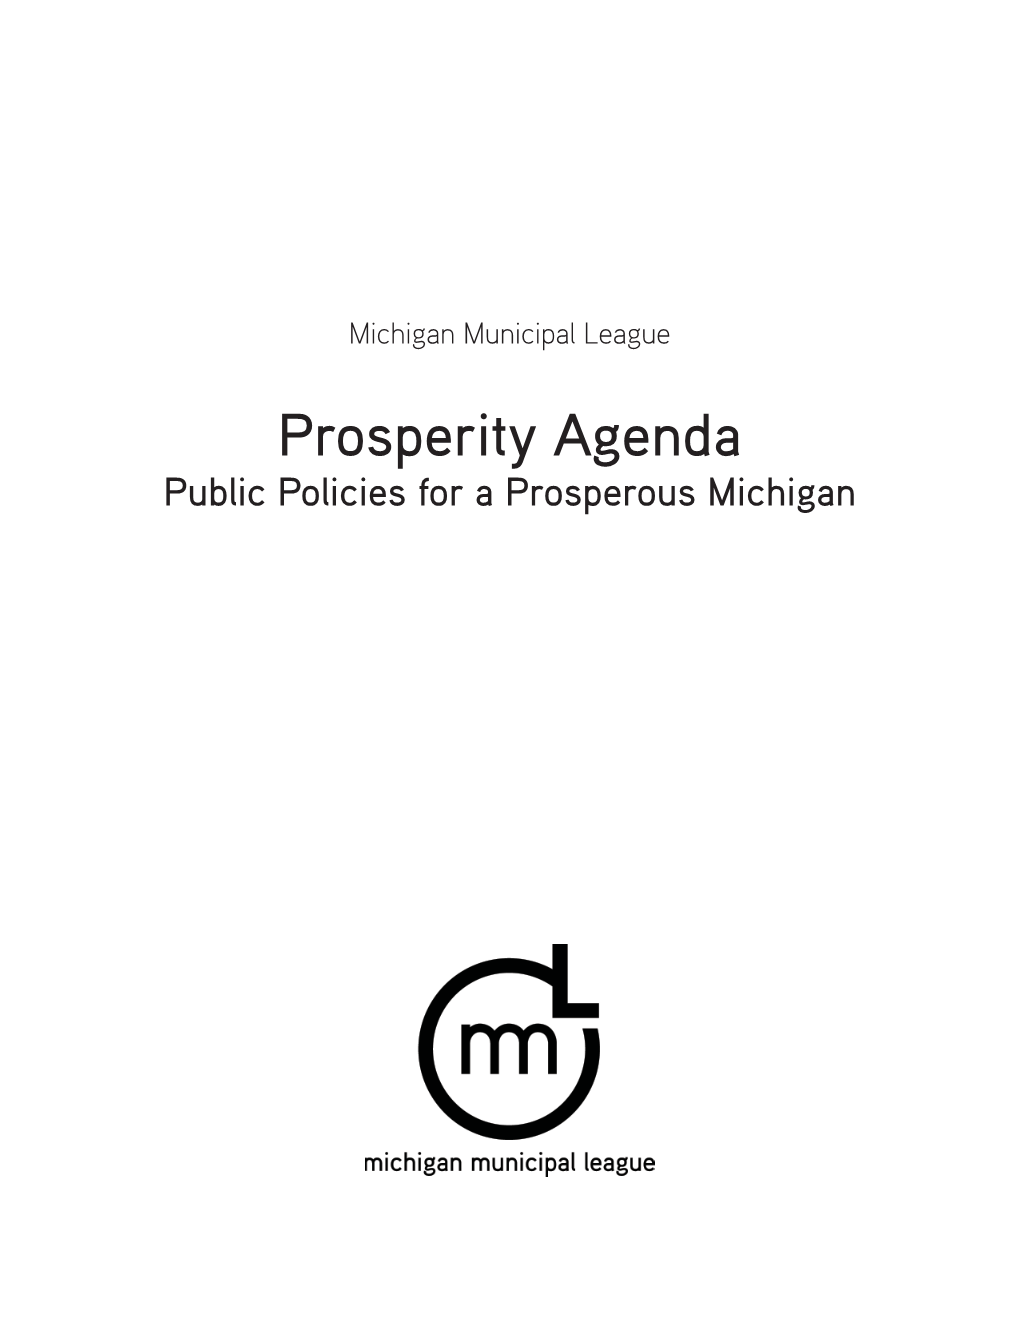 Prosperity Agenda Public Policies for a Prosperous Michigan PUBLIC POLICIES for a PROSPEROUS MICHIGAN